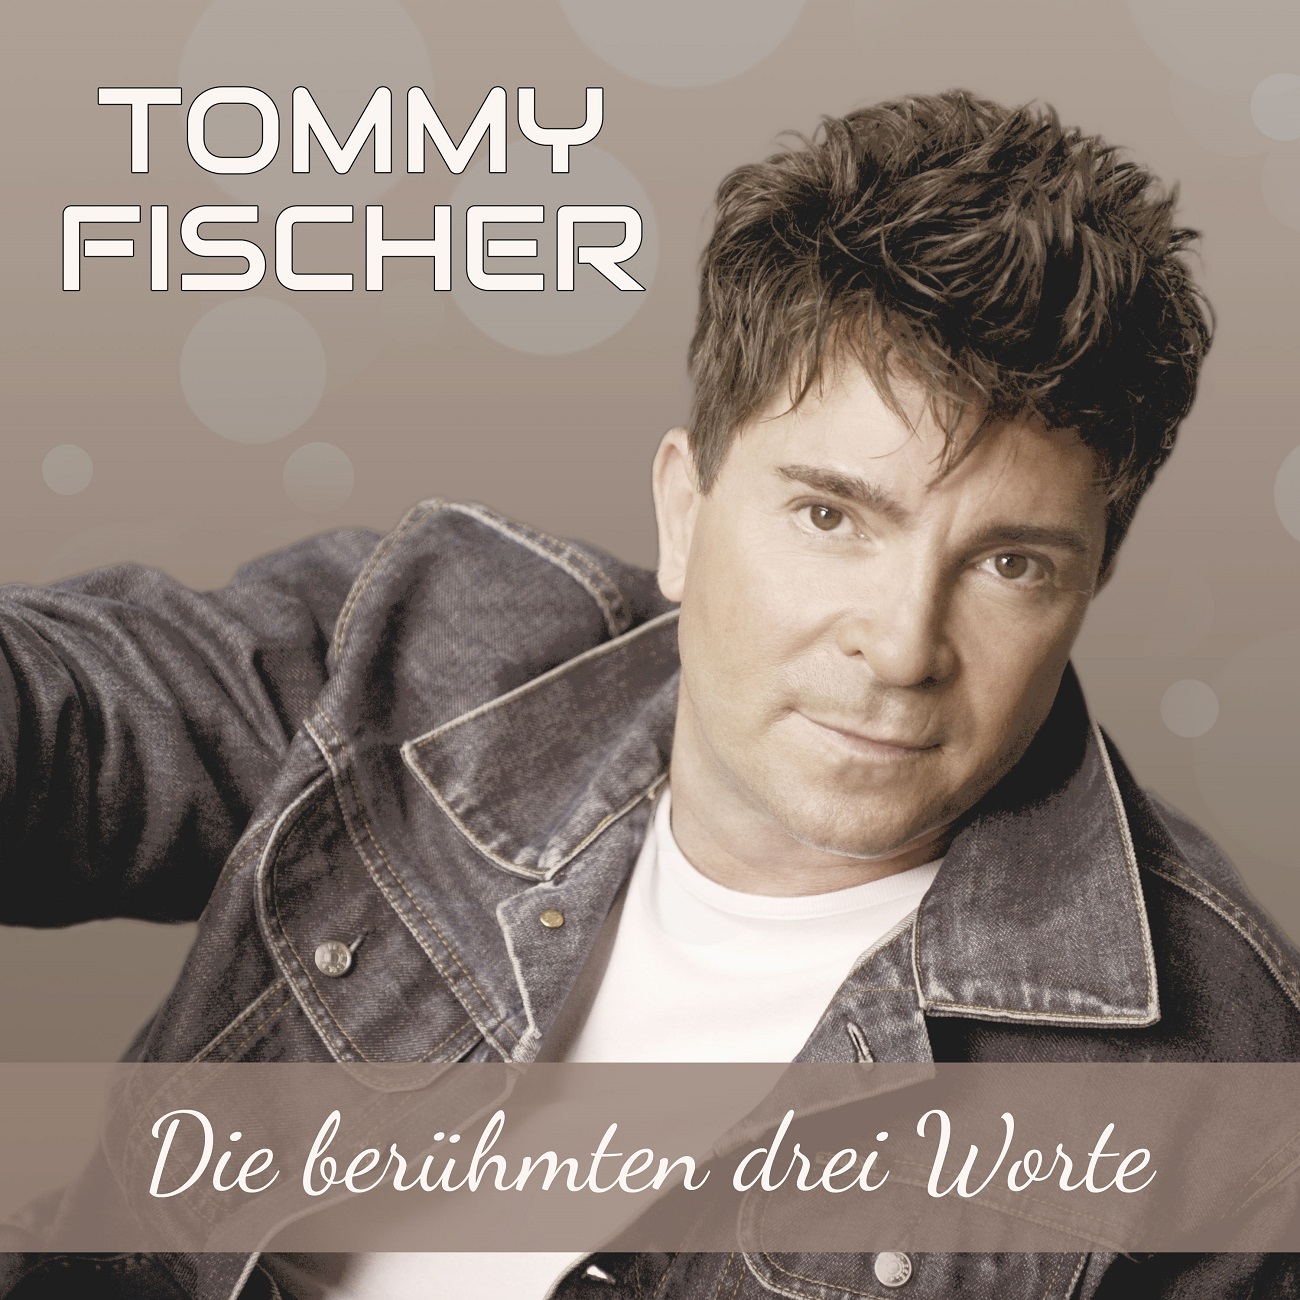 Tommy Fischer - Die berhmten drei Worte - Cover.jpg